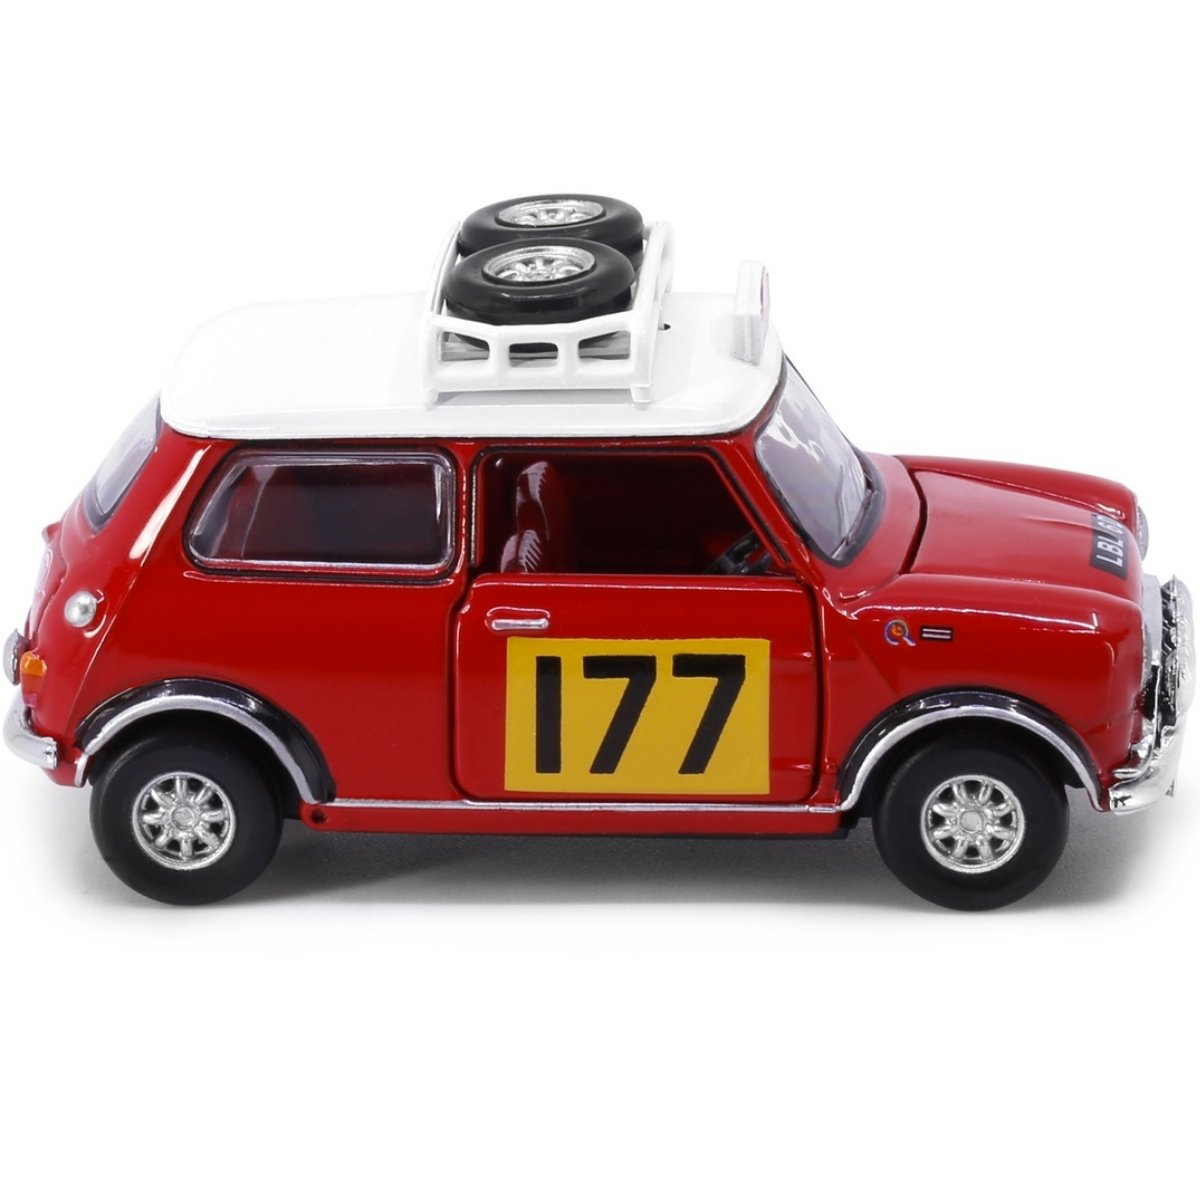 Tiny Models ATC64546 Mini Cooper MK1 Rally (1:50 Scale) - Phillips Hobbies